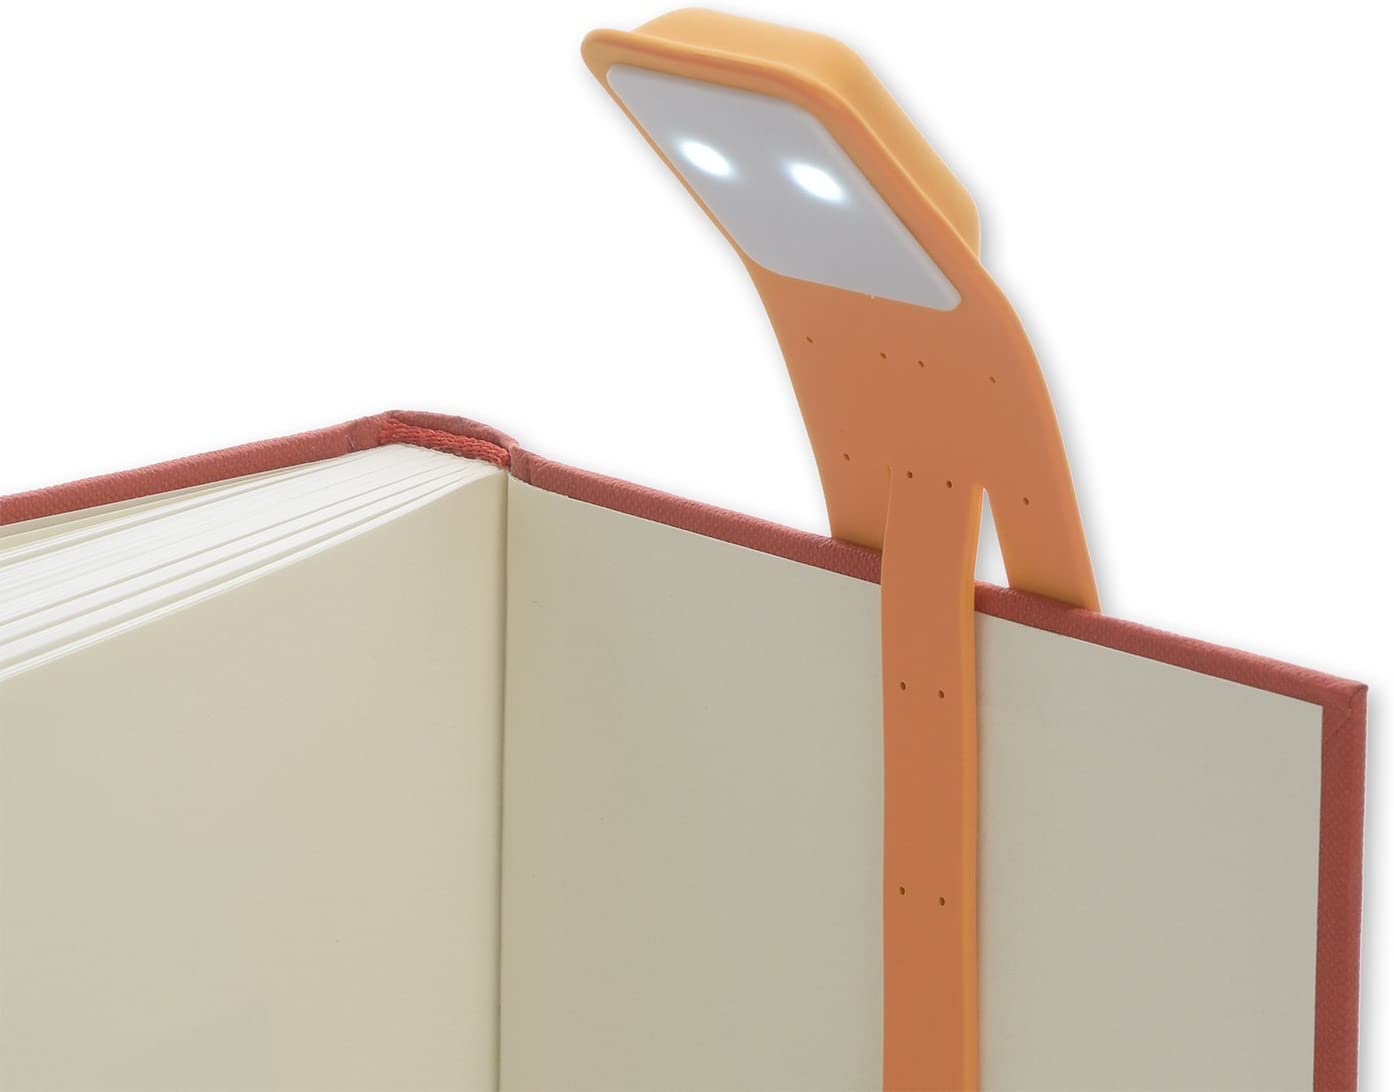 MOLESKINE Booklight Orange